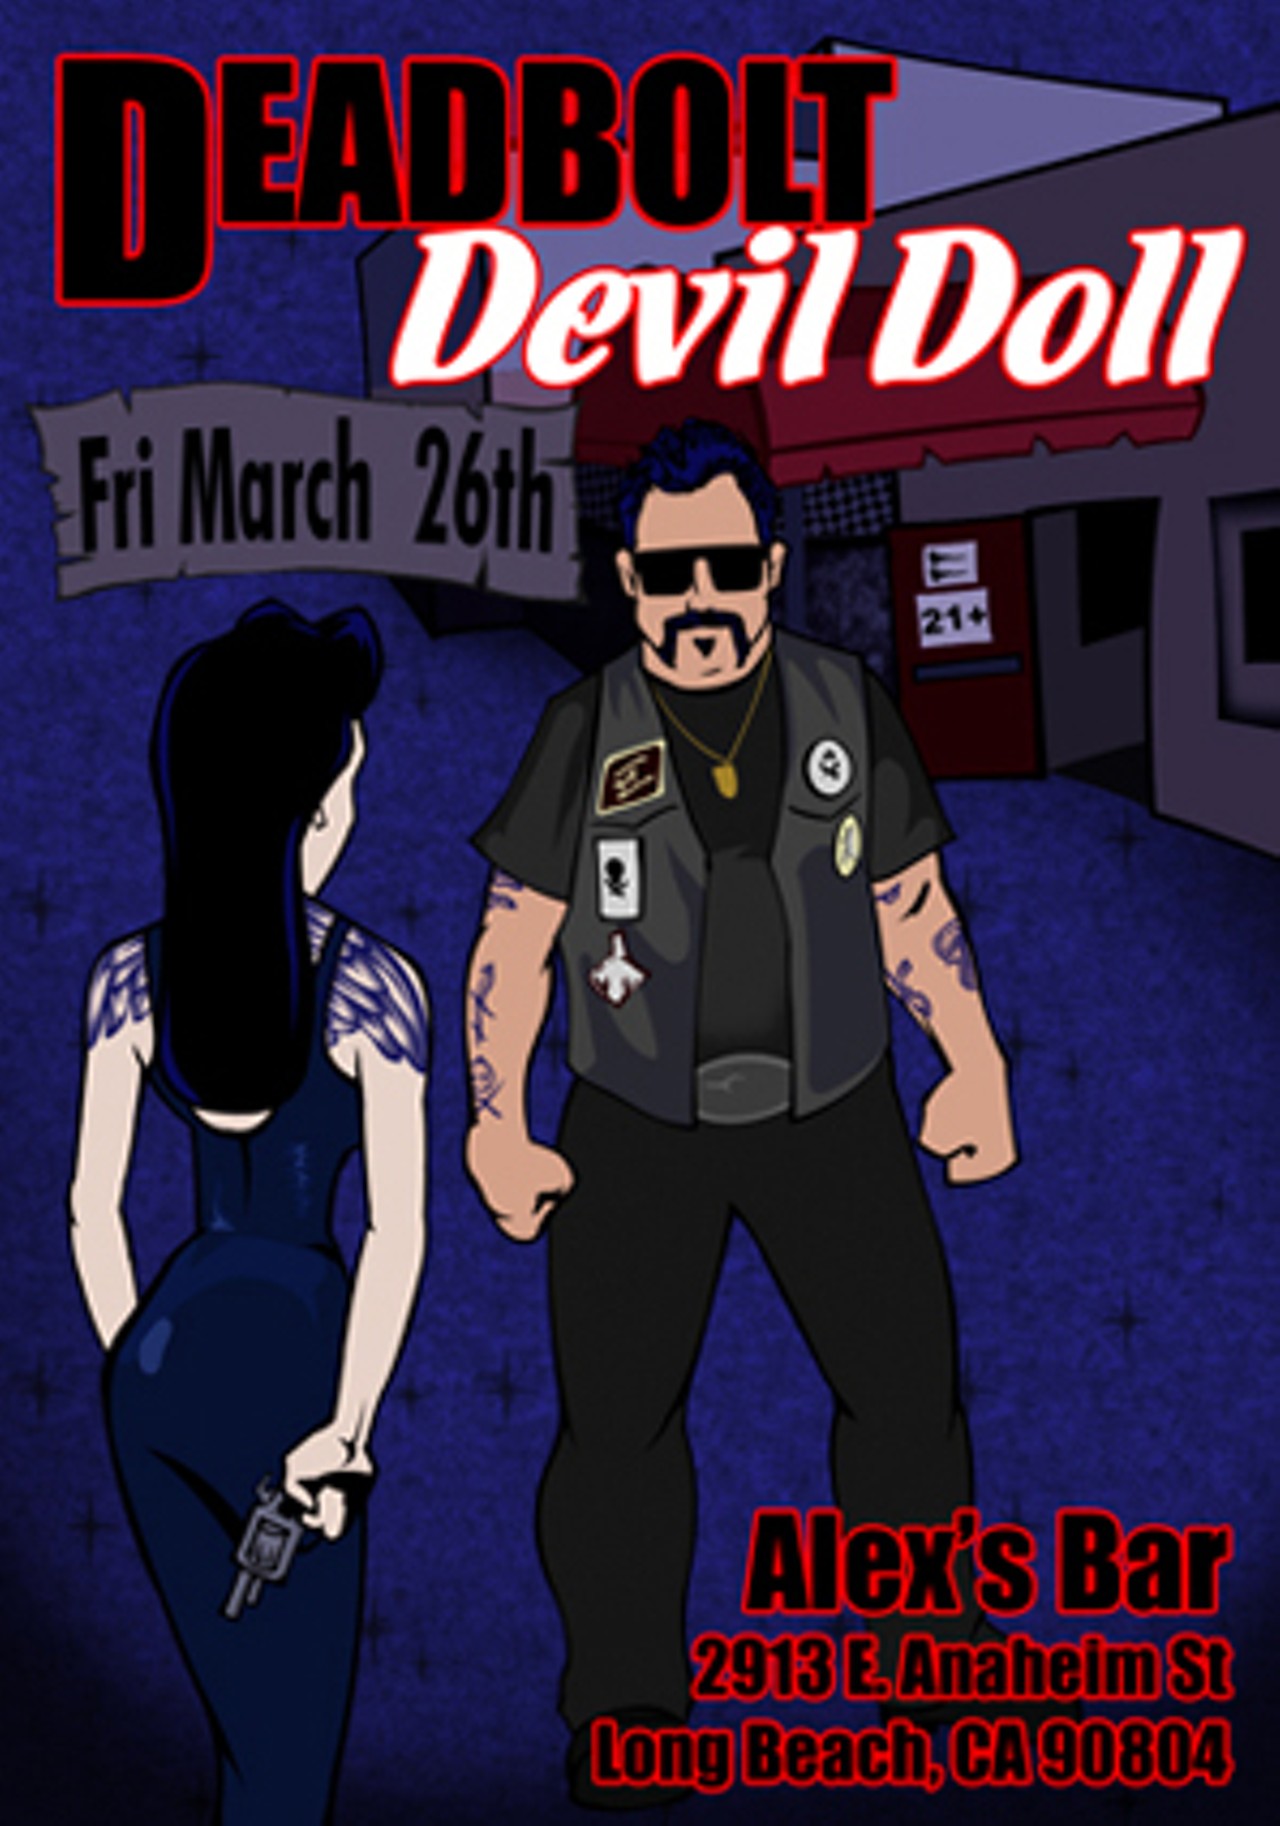 Devil Doll Posters